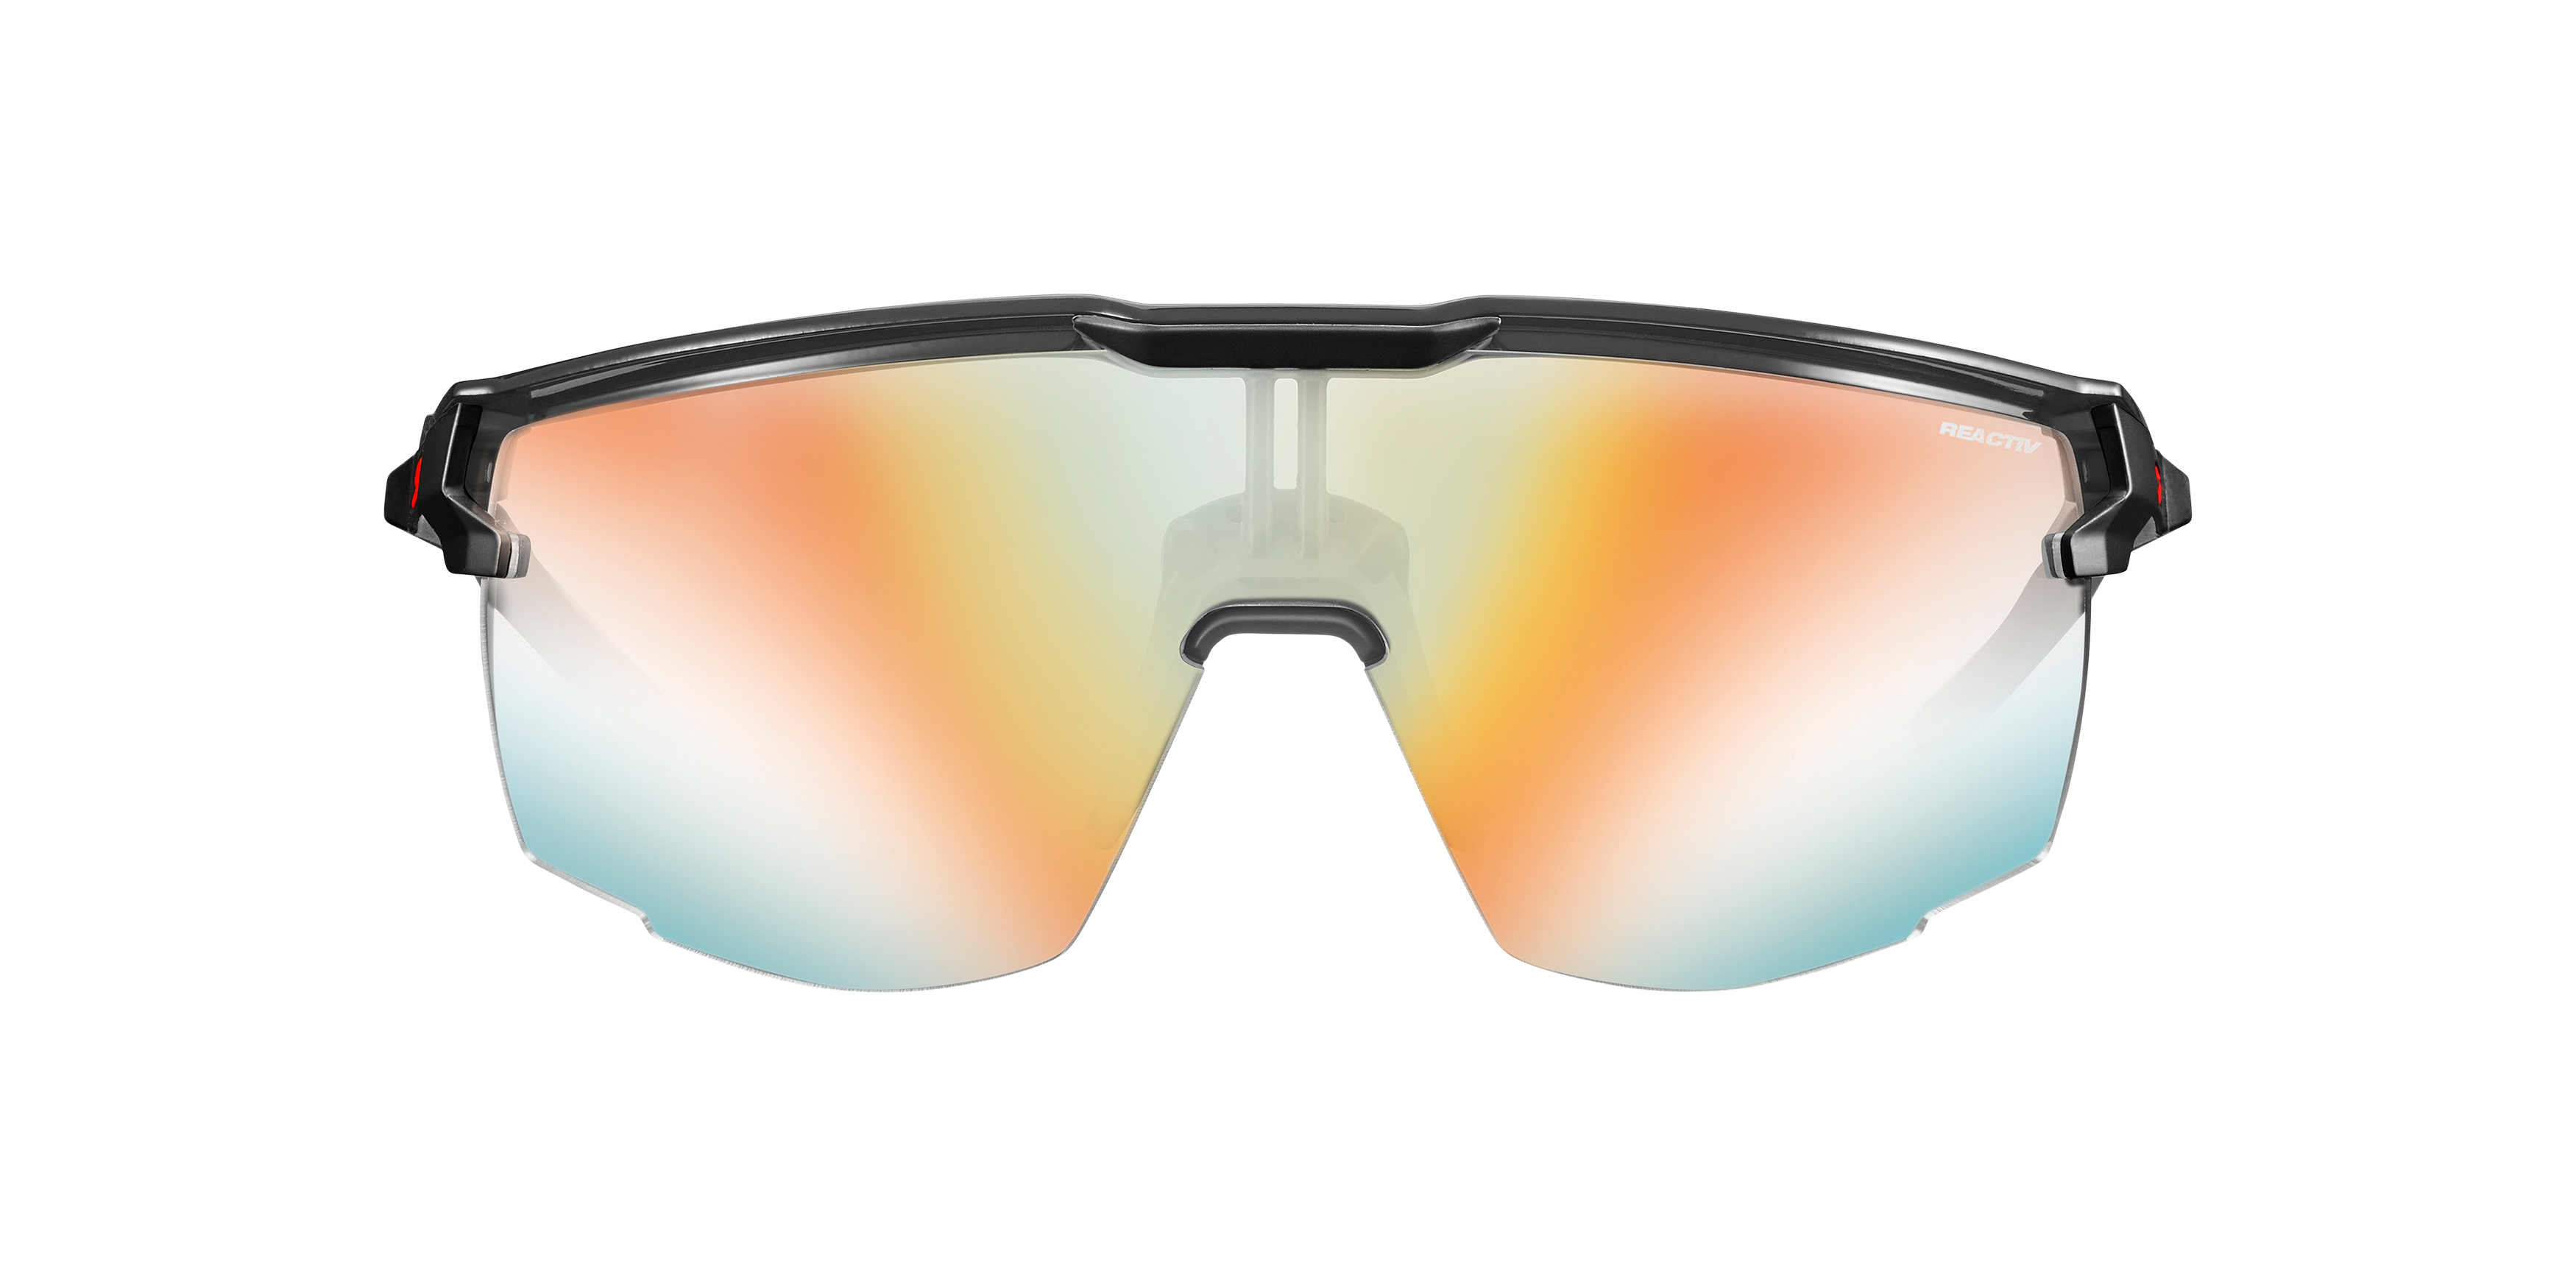 Gewend Norm campagne Fietsbril of sportbril op sterkte nodig? Bekijk het aanbod online | Eye  Wish Opticiens